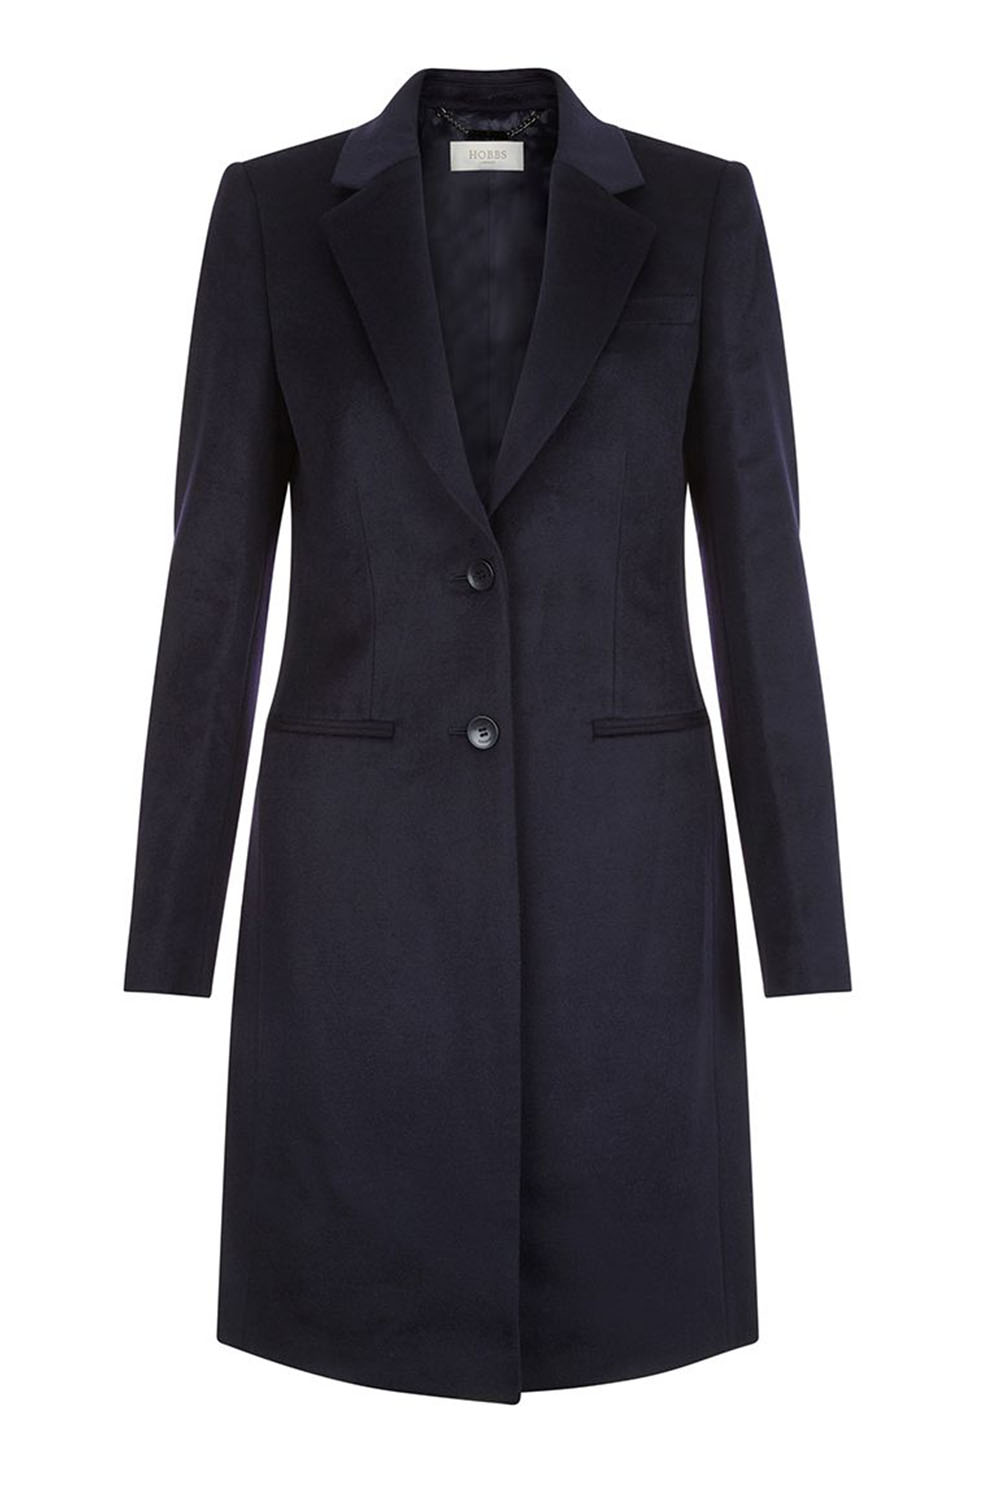 Best Winter Coats - Hobbs Tilda Coat (Navy), £299 - Page 33 | Fashion ...